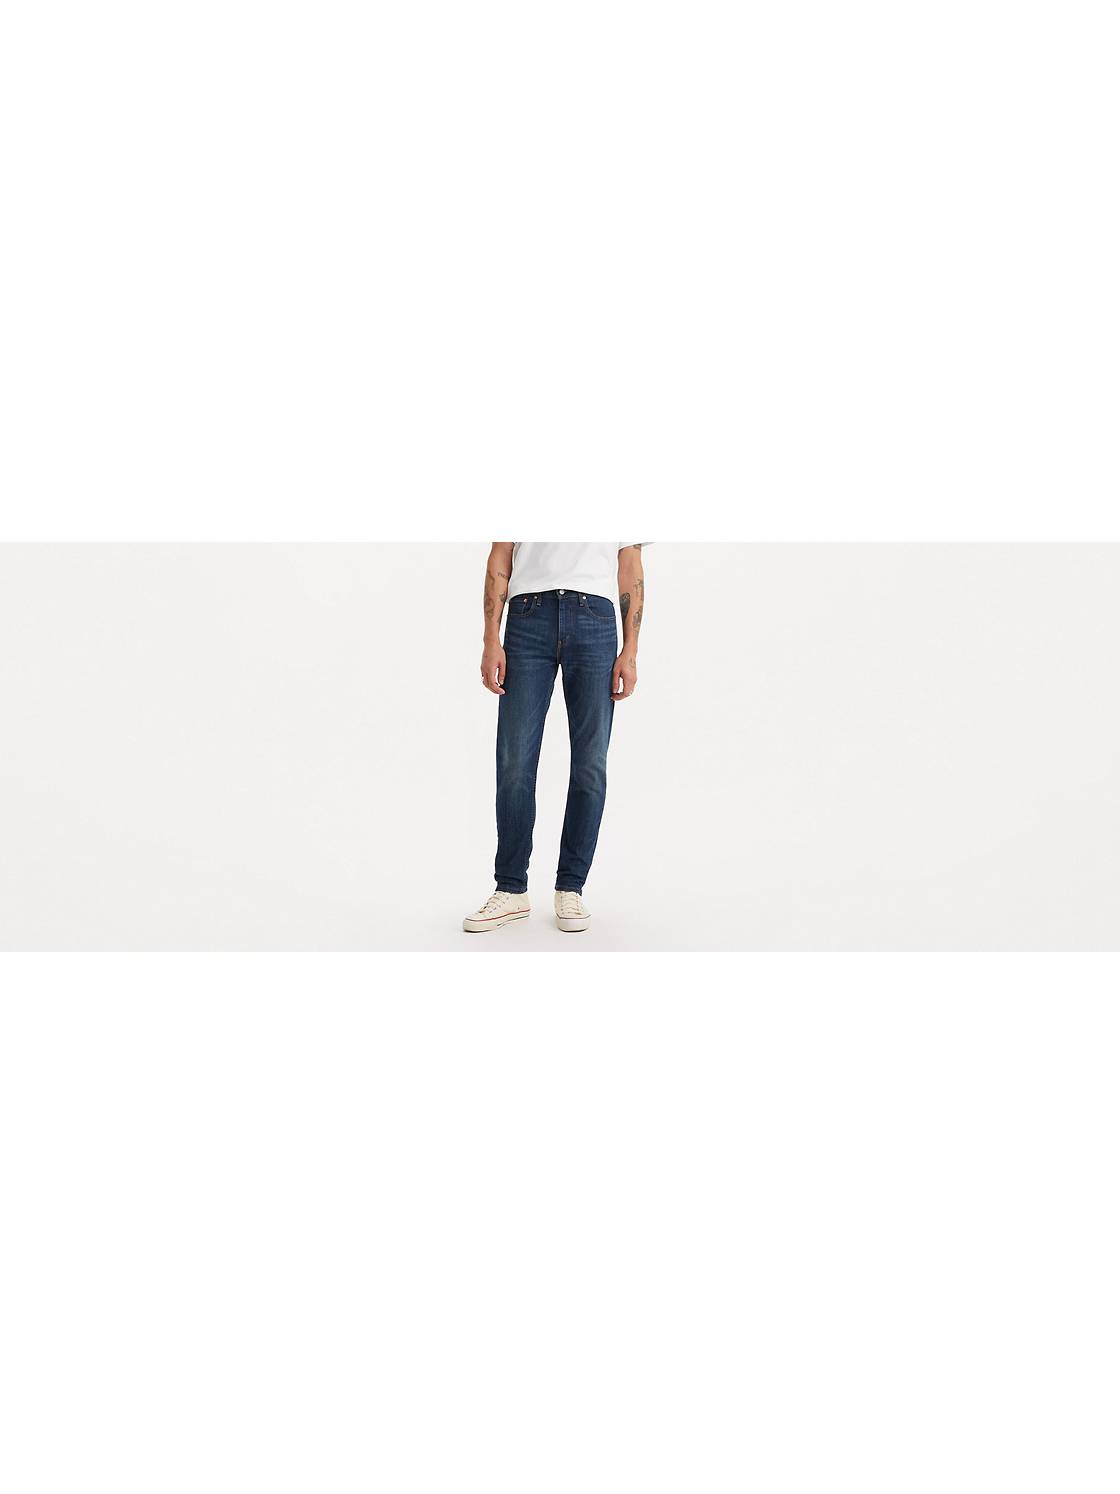 Men's Slim Fit Jeans: Shop Men's Slim Jeans